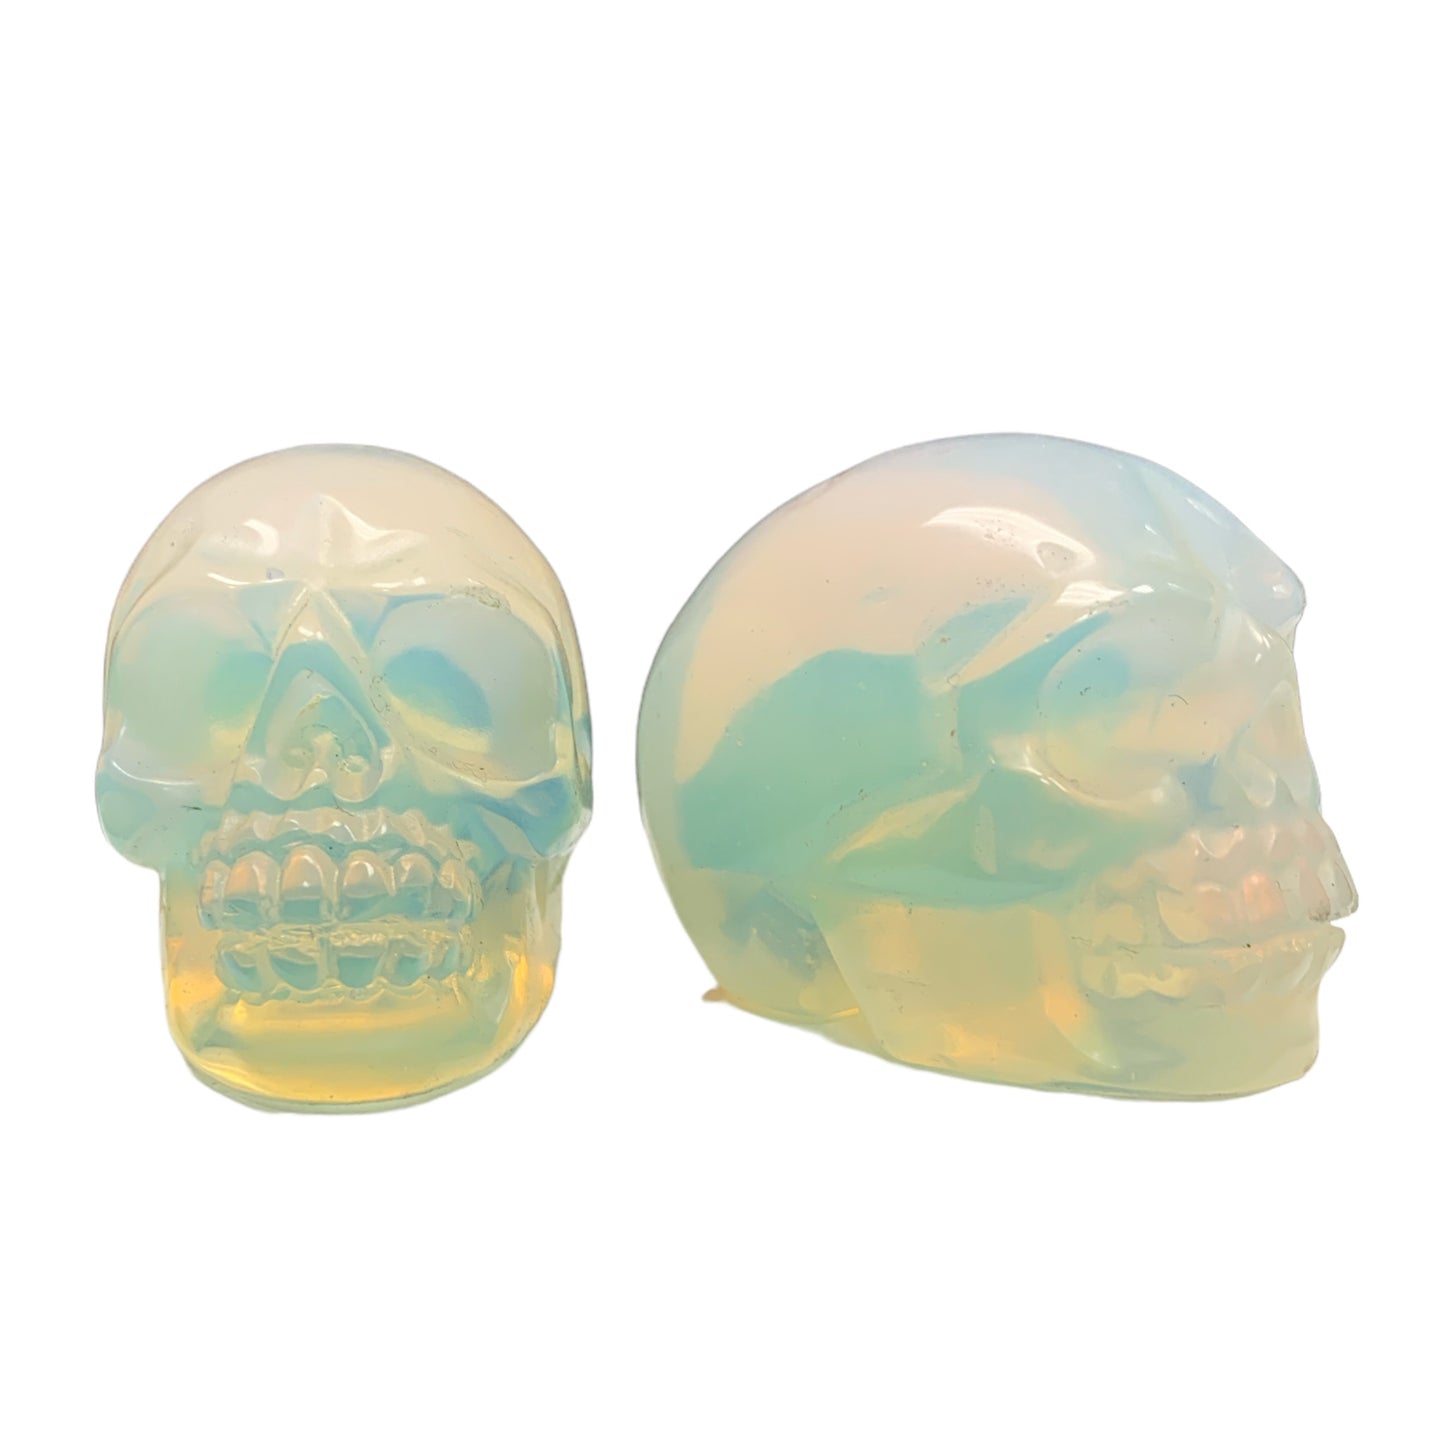 Skull Small - OPALITE - 40x50 mm - China - NEW622